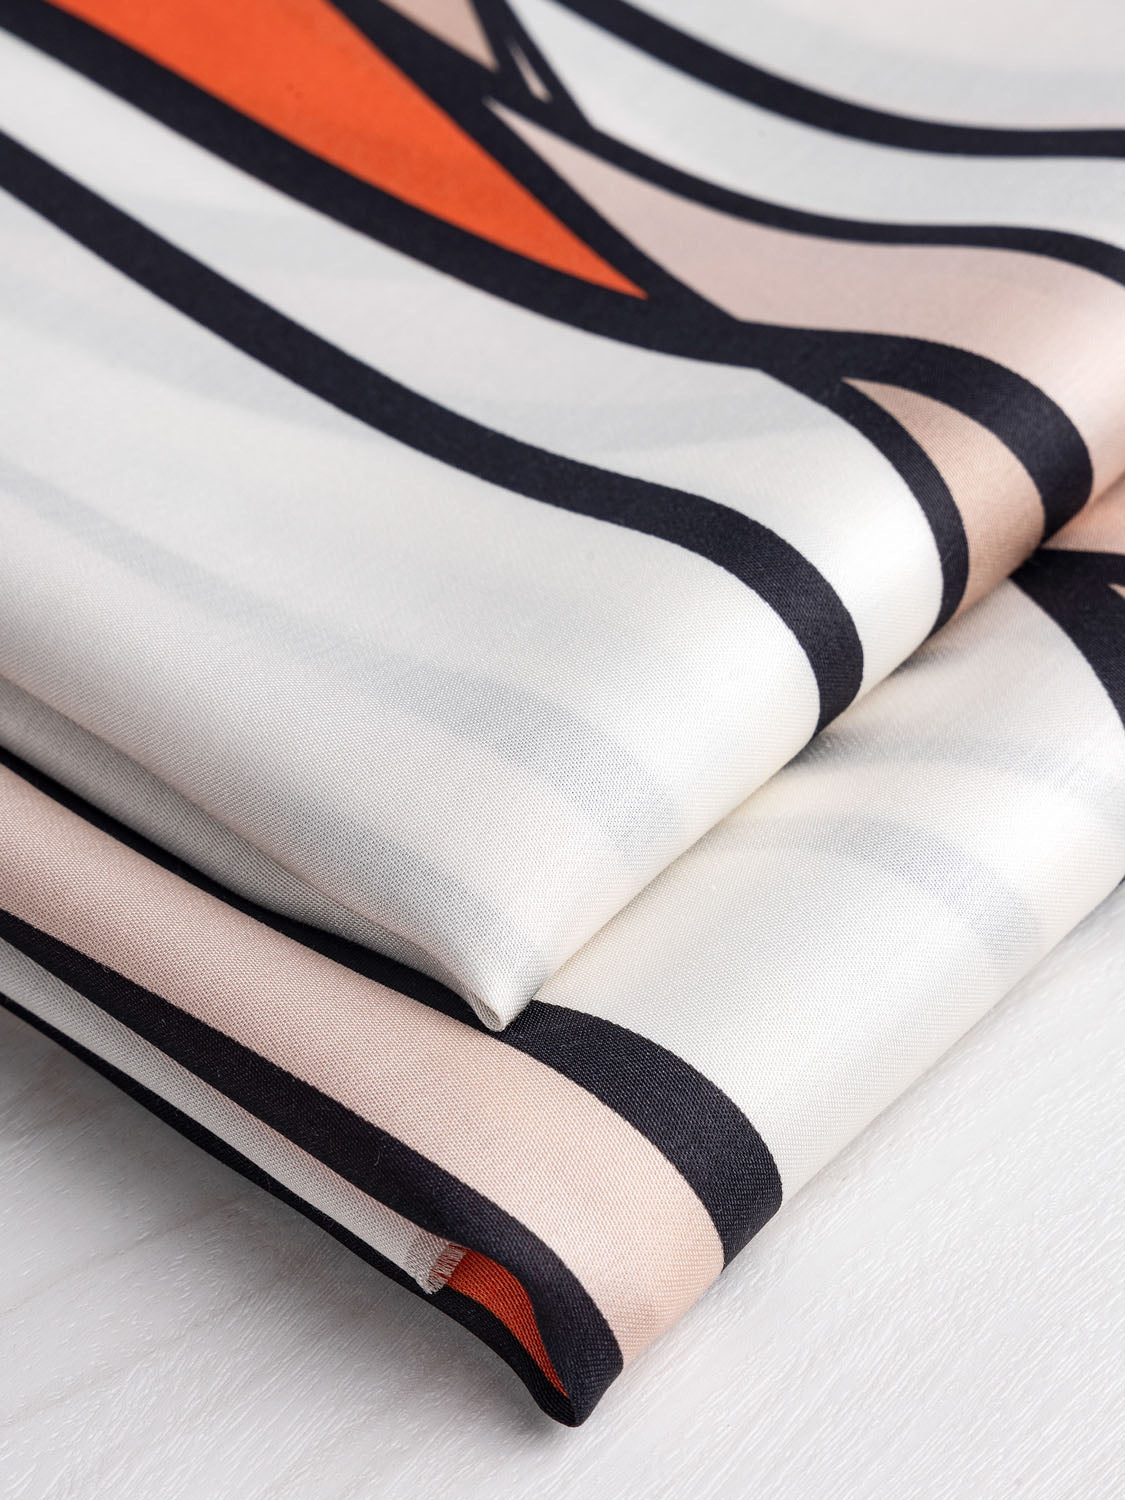 Lightweight stretch satin fabric by the yard - High fashion inspired print